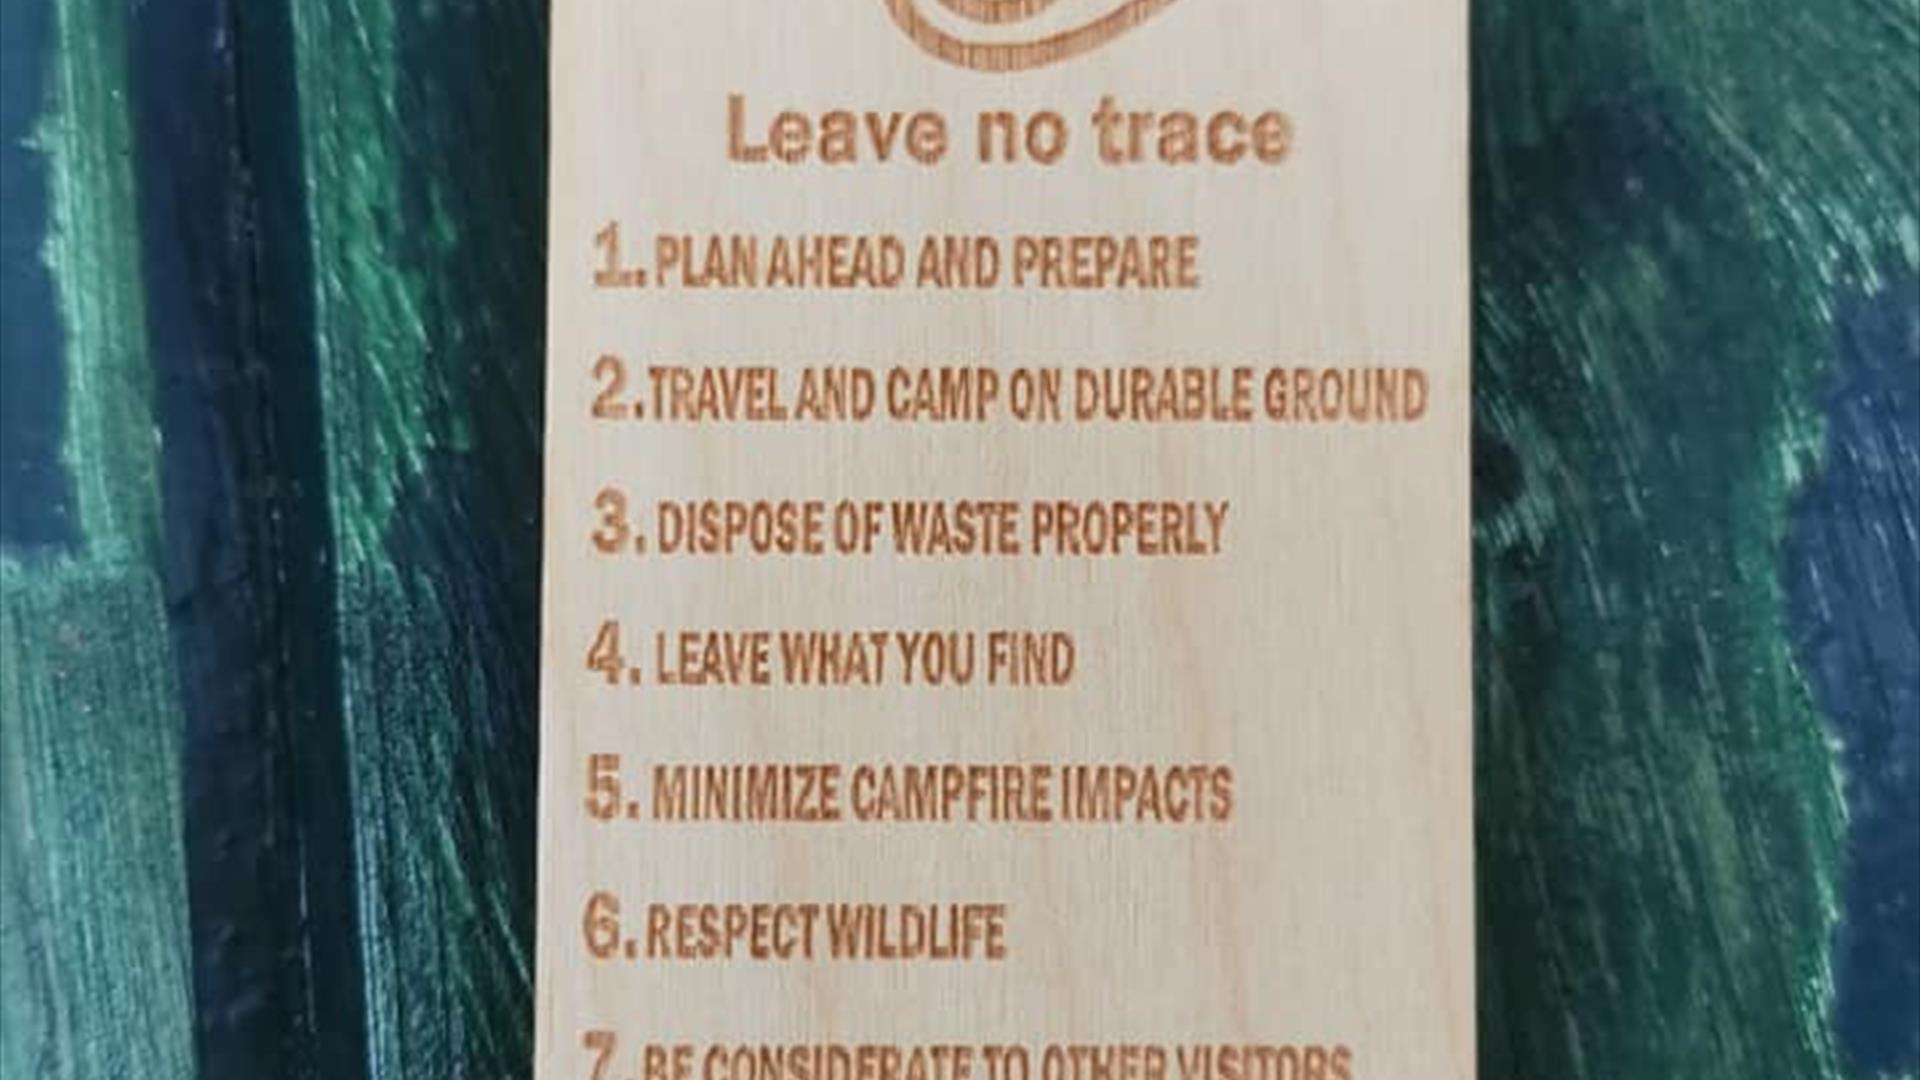 Leave No Trace principles